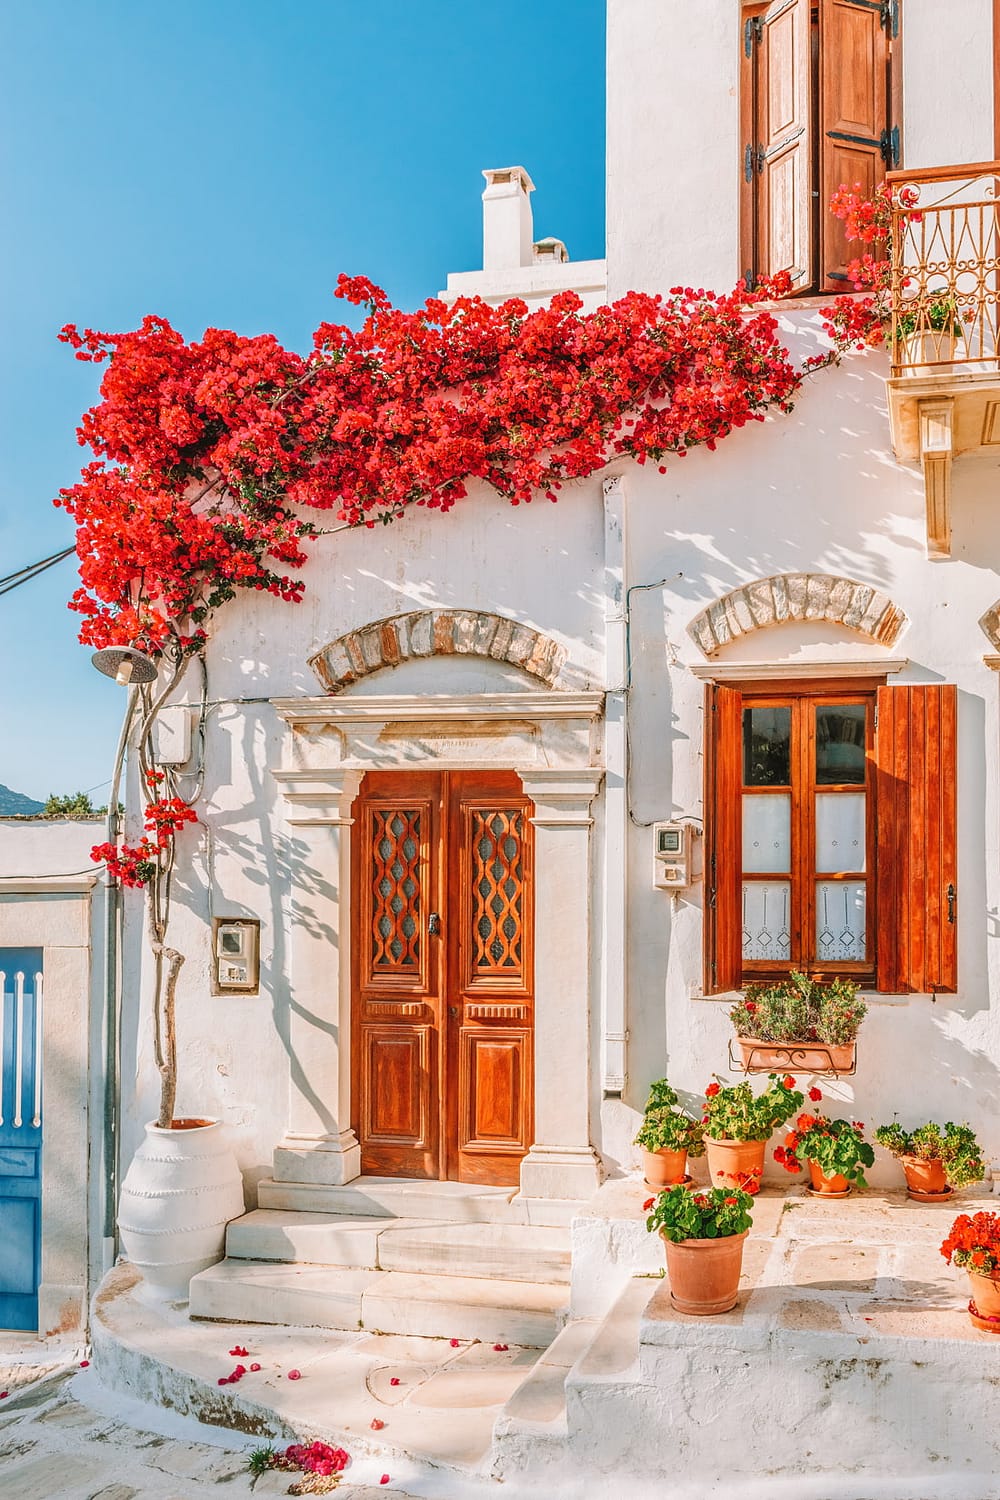 Village on Tinos Island, Greece